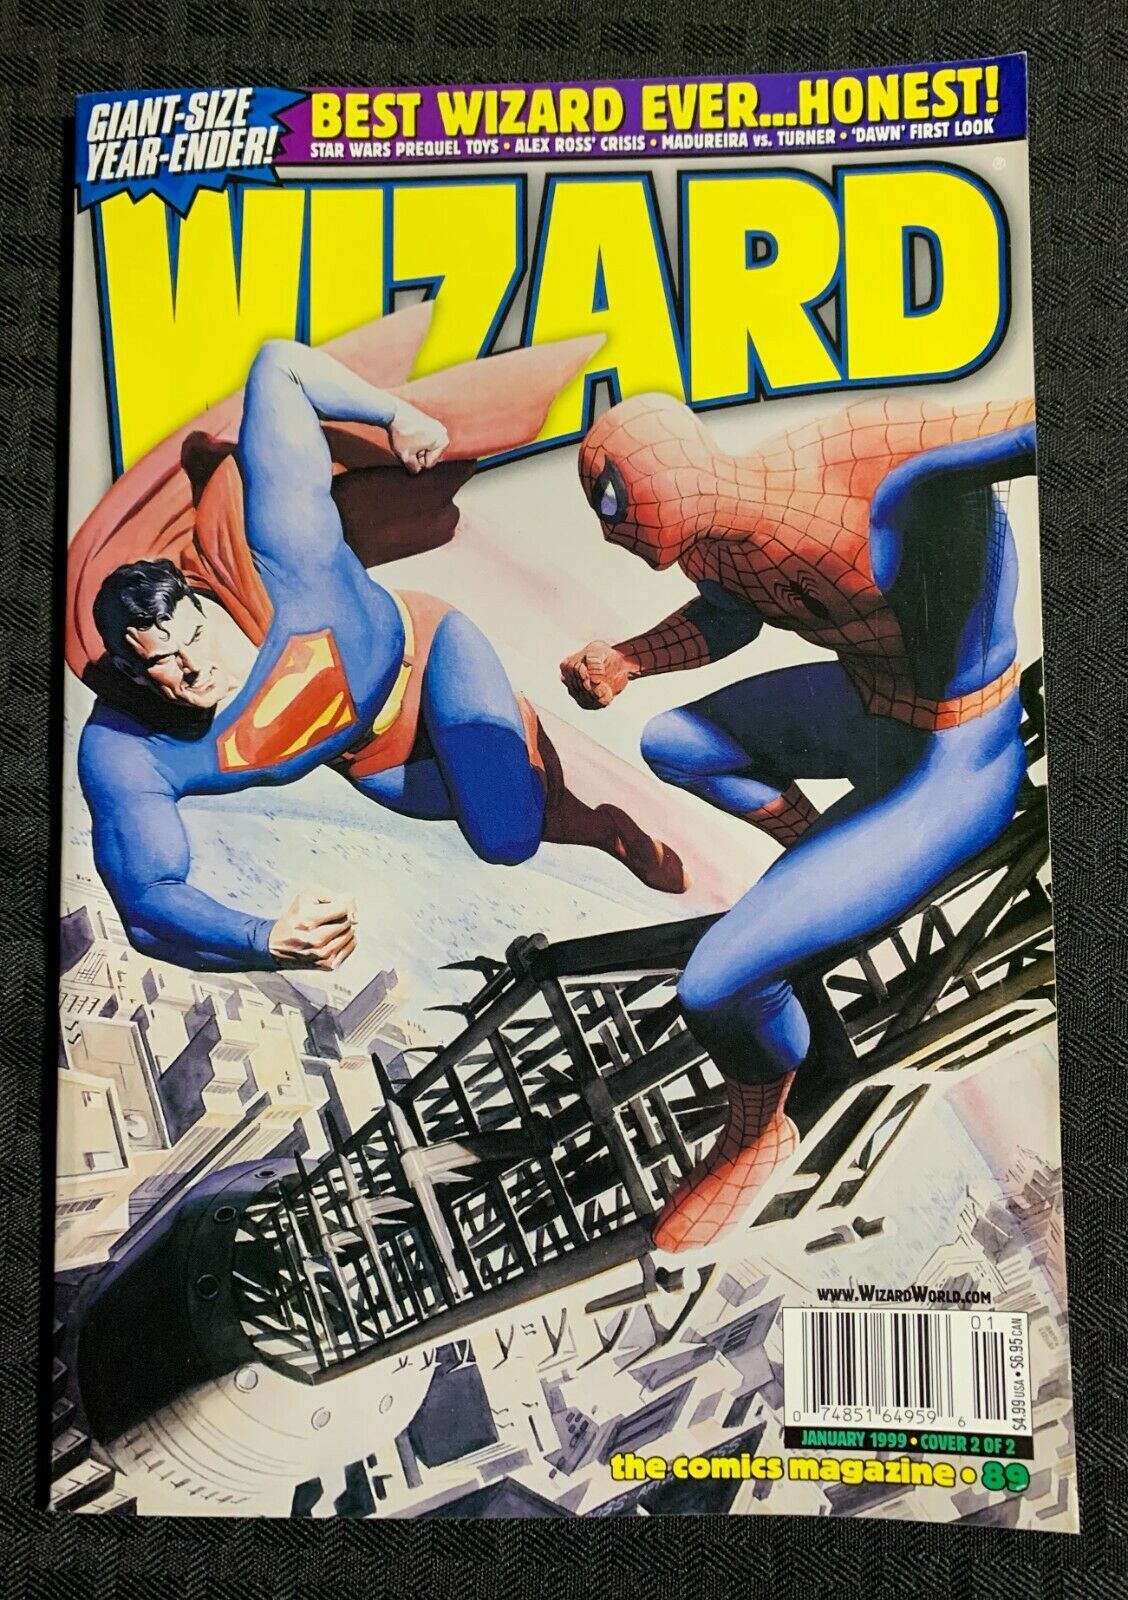 1999 WIZARD Magazine #89 FN+  Alex Ross Superman vs Spiderman Cover #2 |  Comic Books - Modern Age, Superman / HipComic